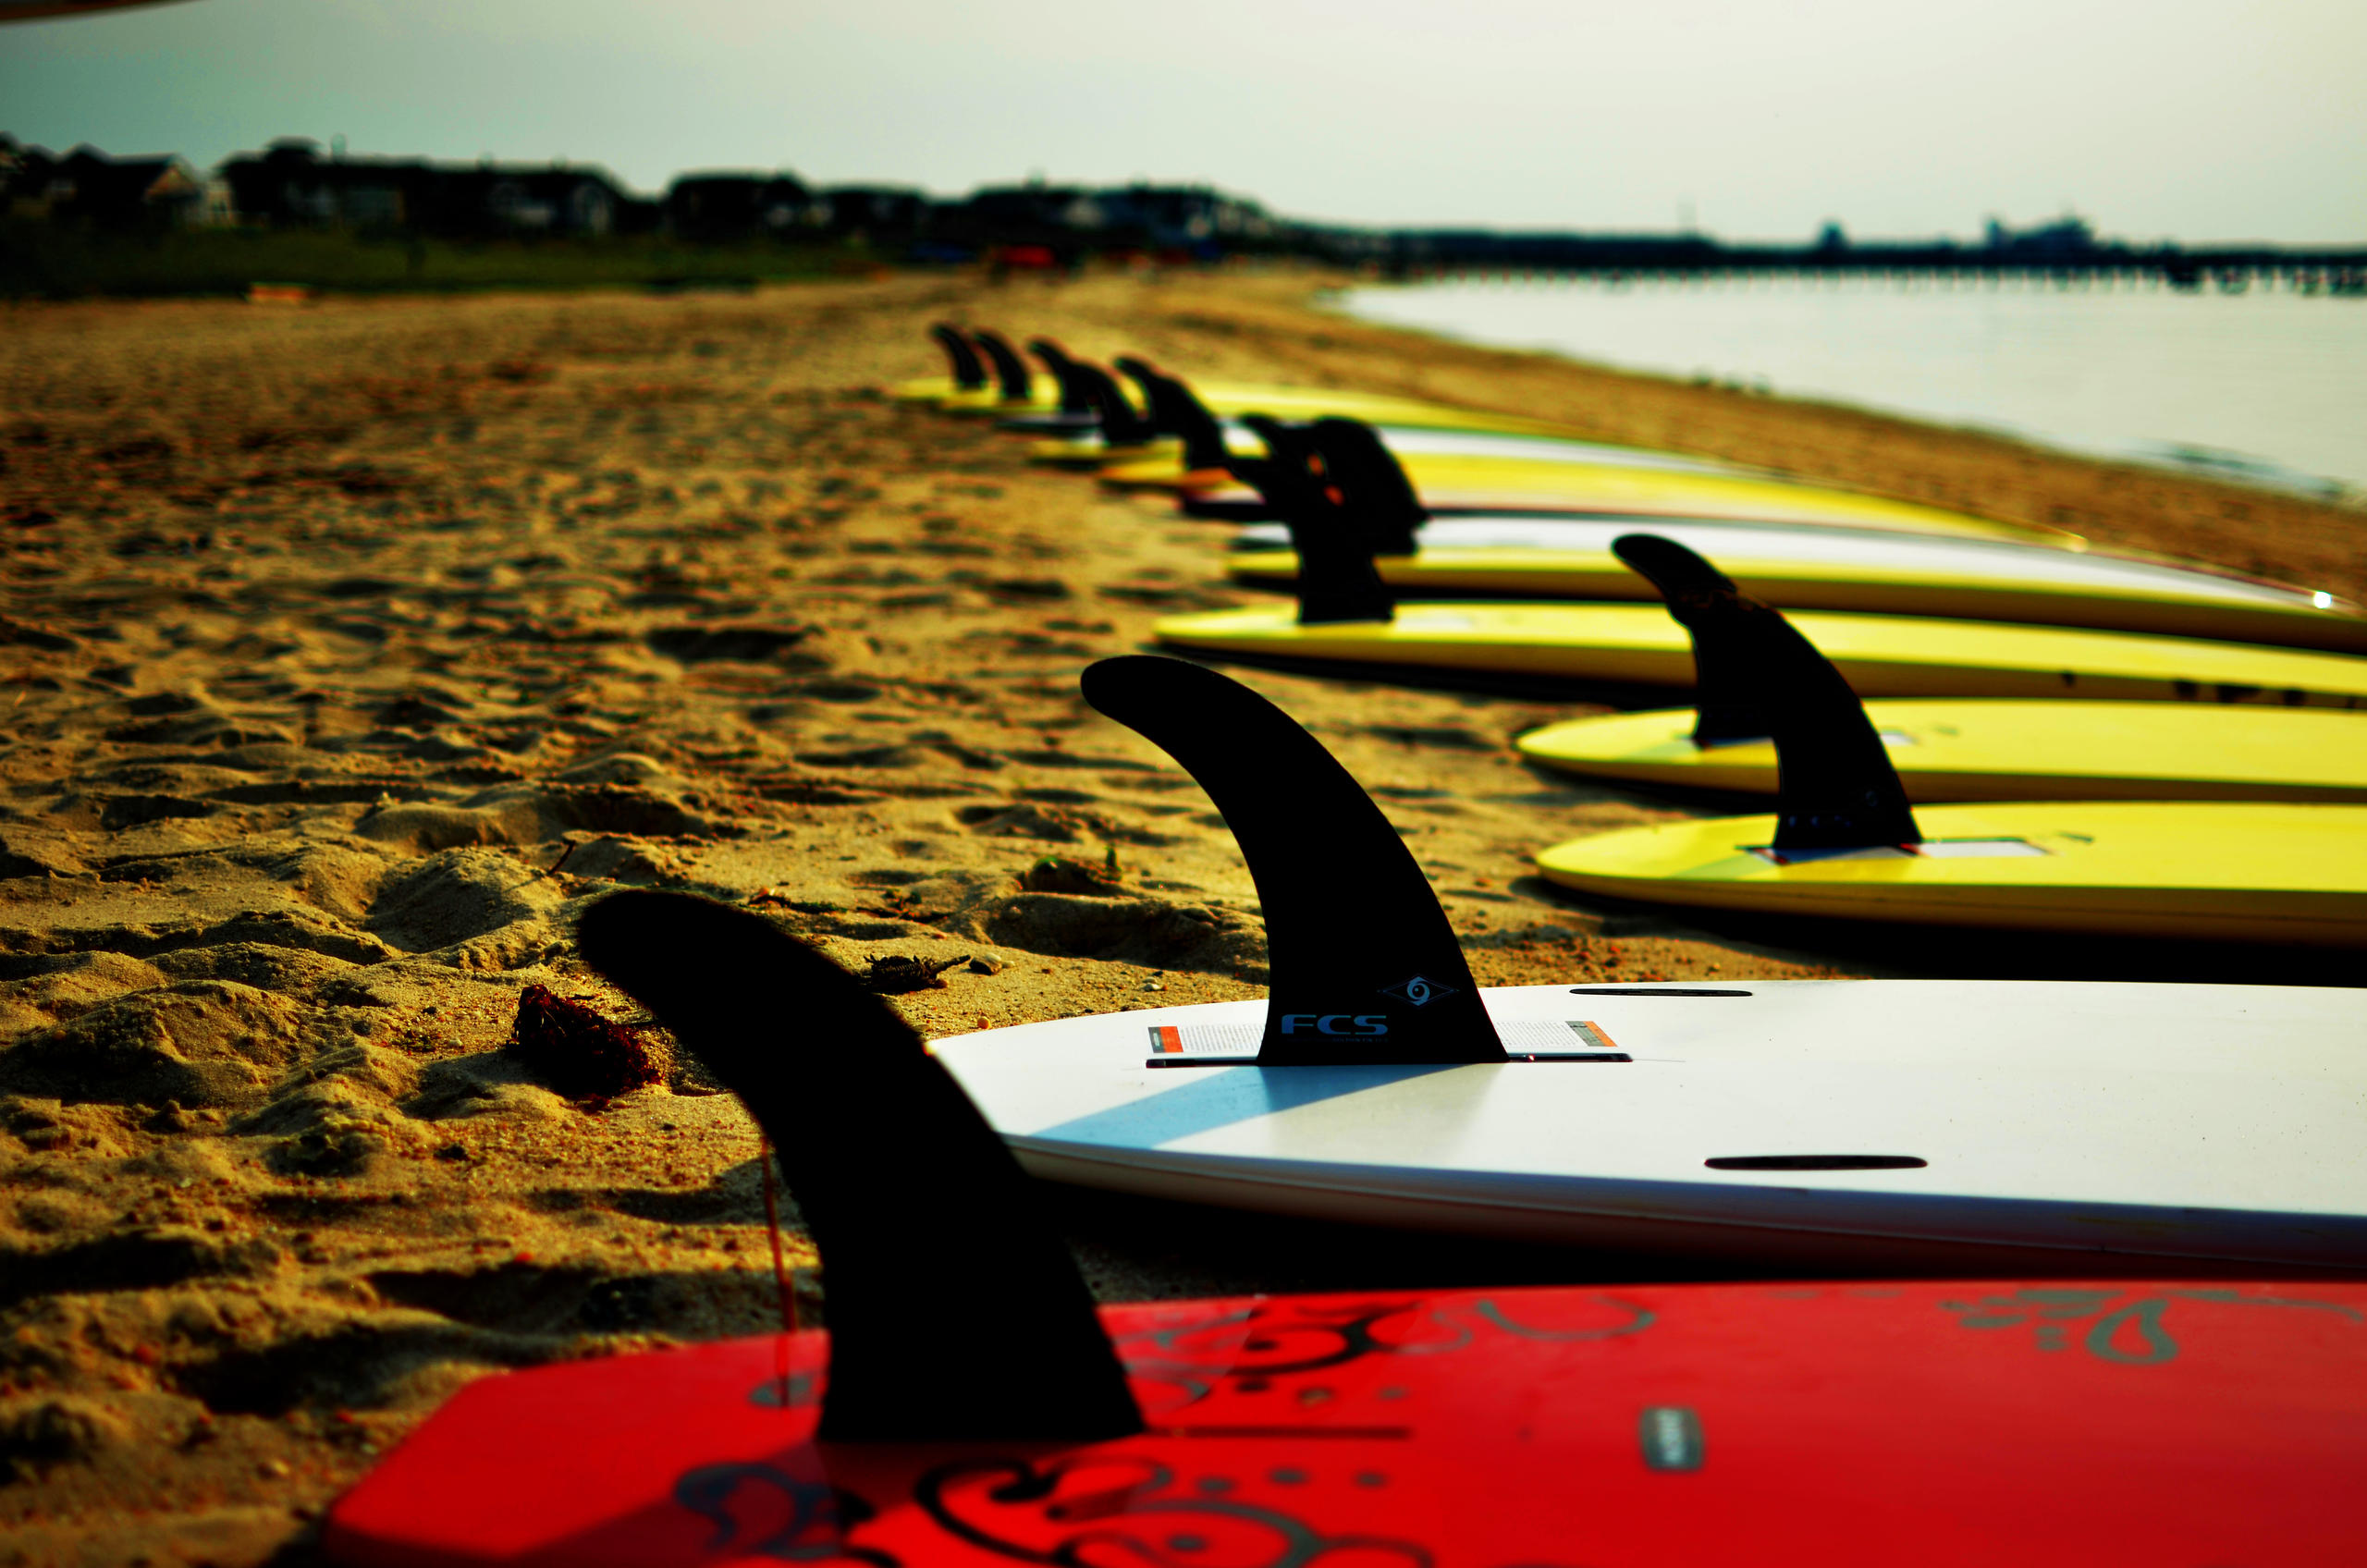 SUP Board Rental in Dewey Beach